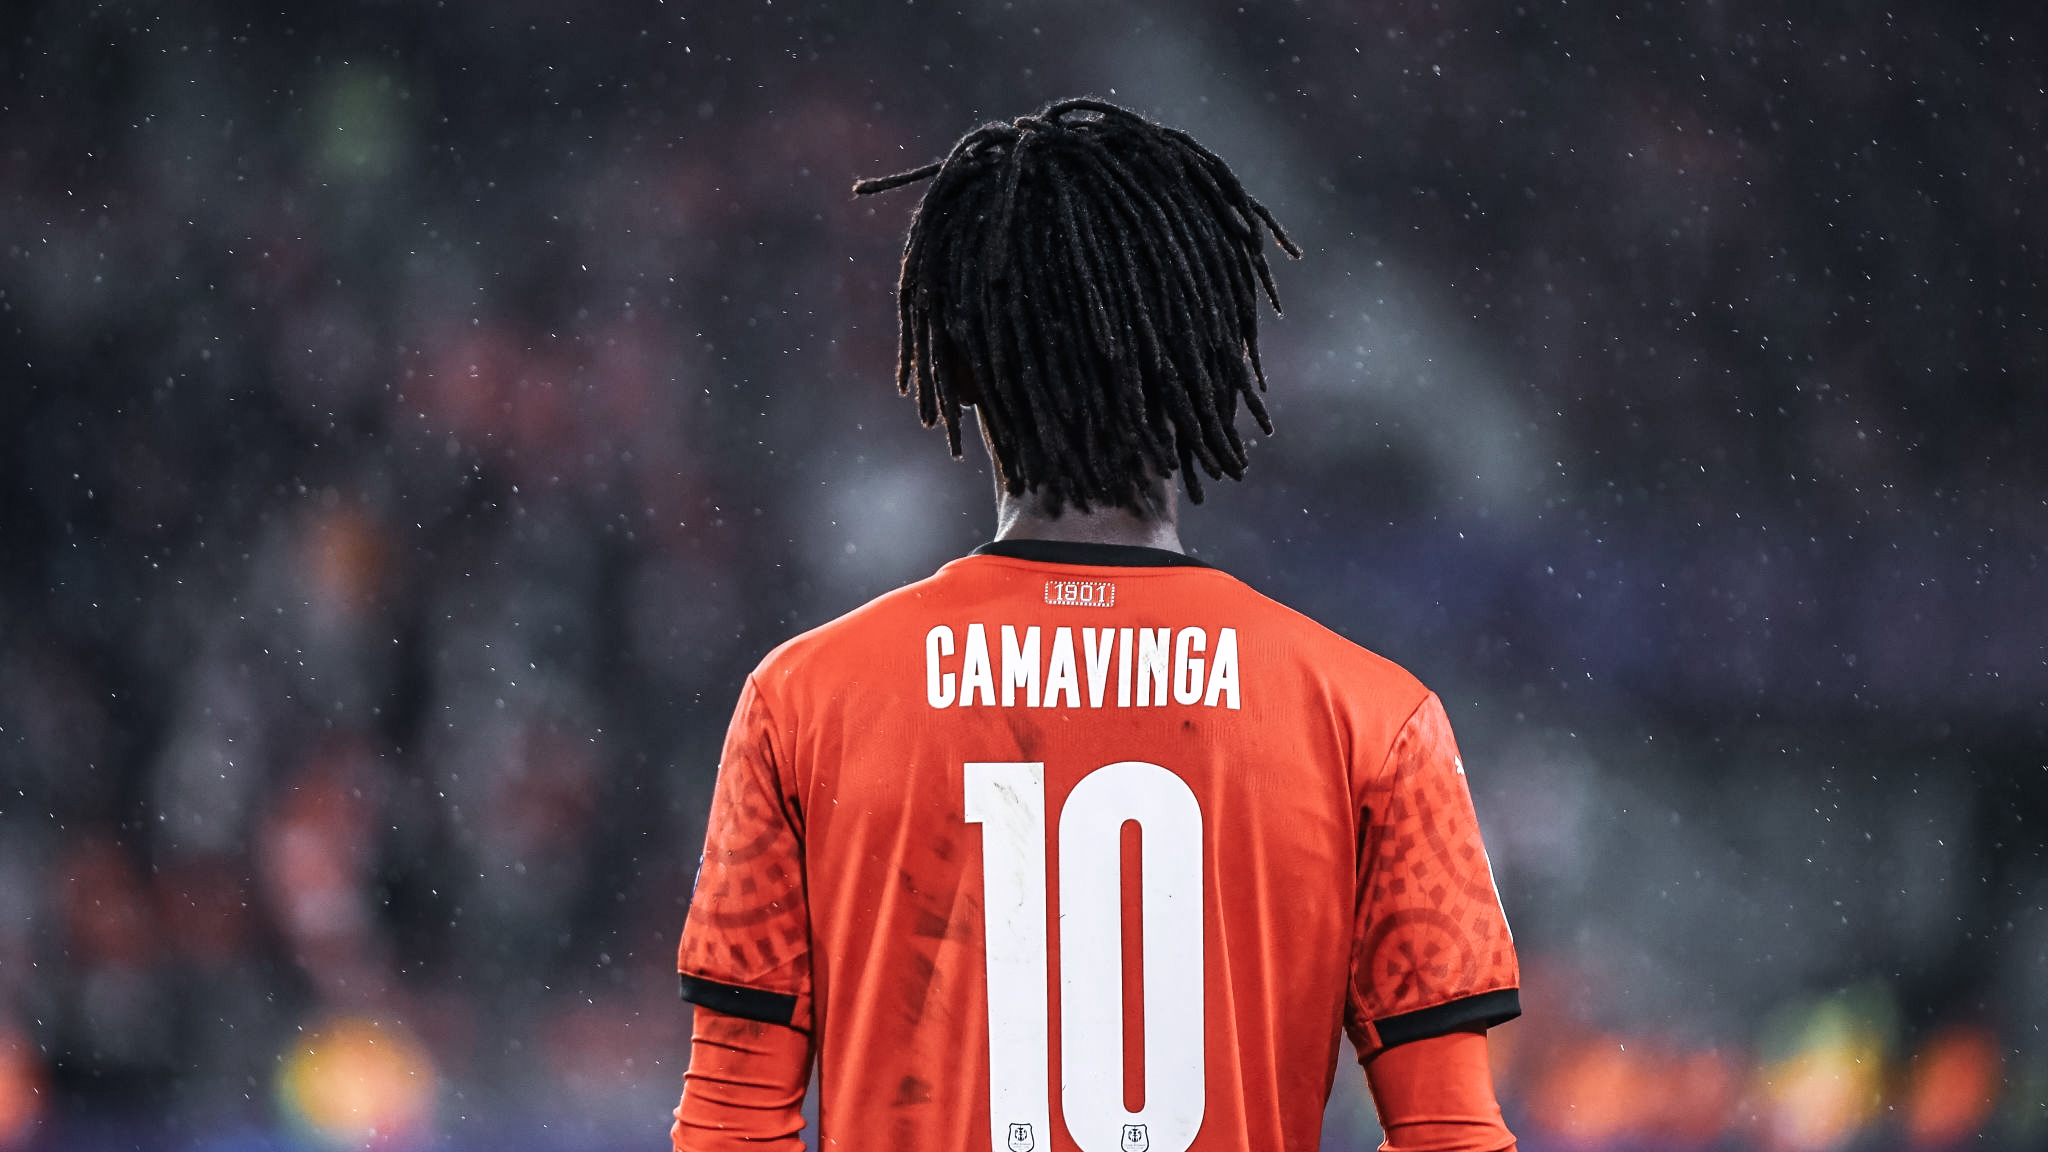 Profiling Eduardo Camavinga, linked to PSG and Manchester United